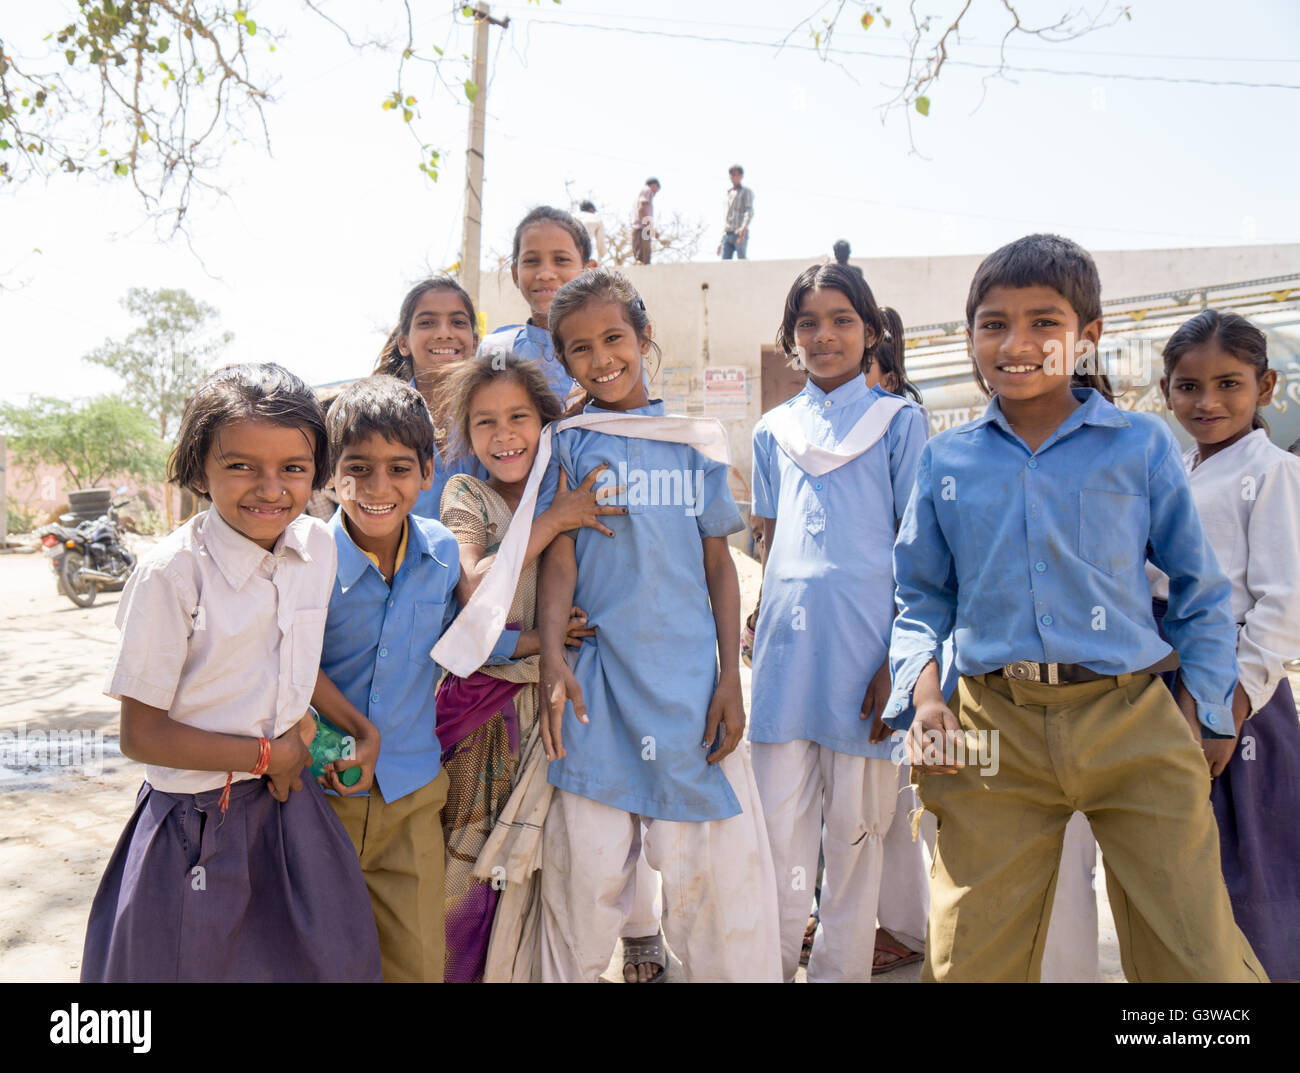 Indian school kids in their uniforms Stock Photo